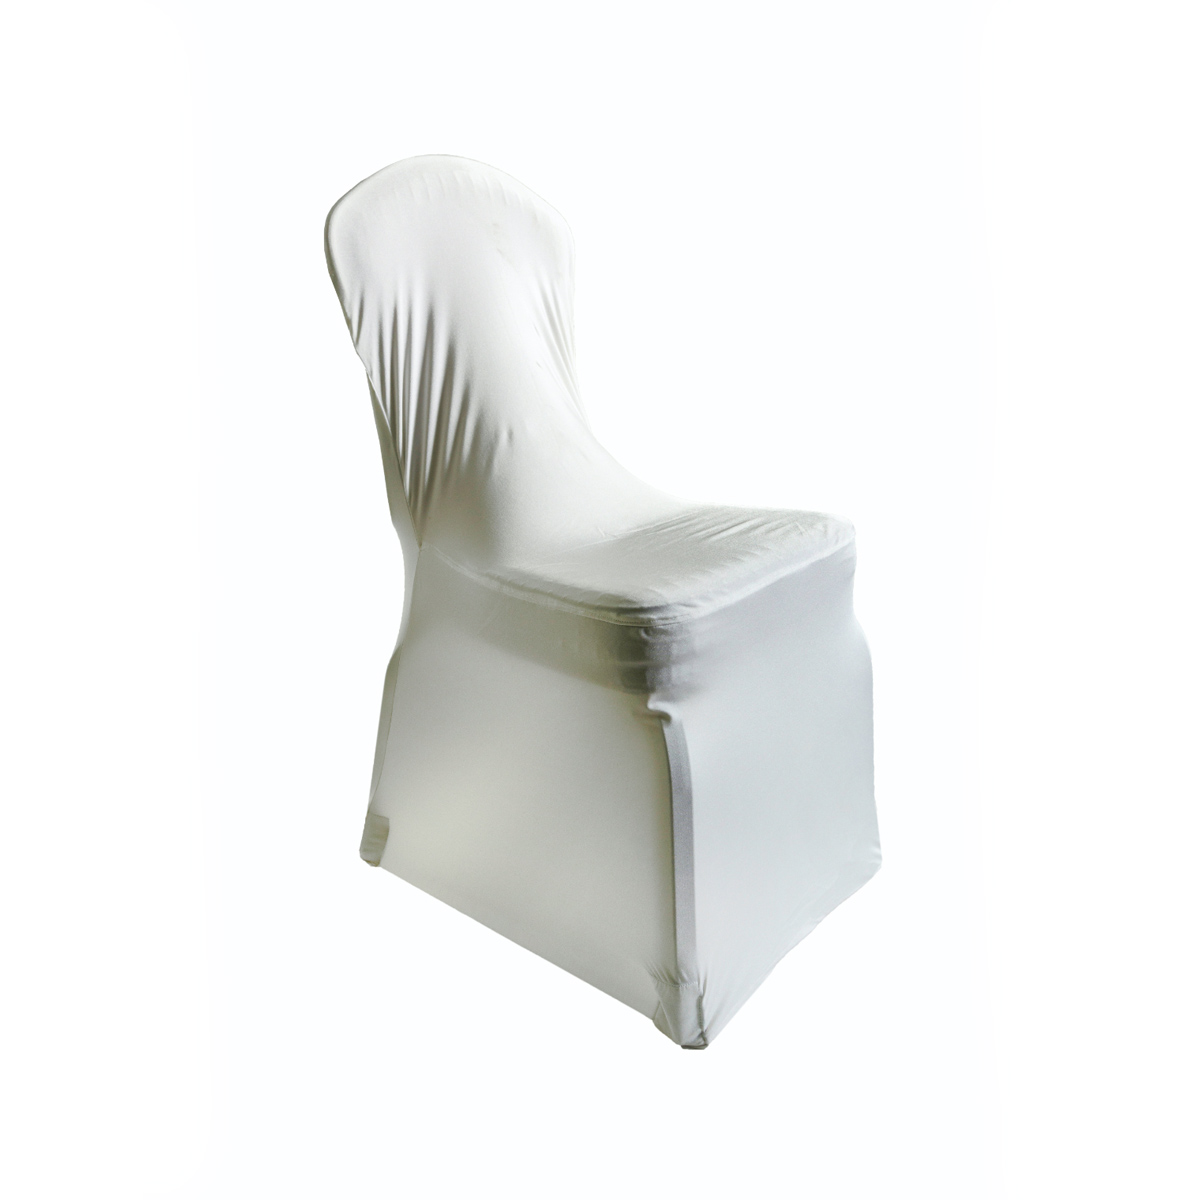  White Spandex Chair Cover 